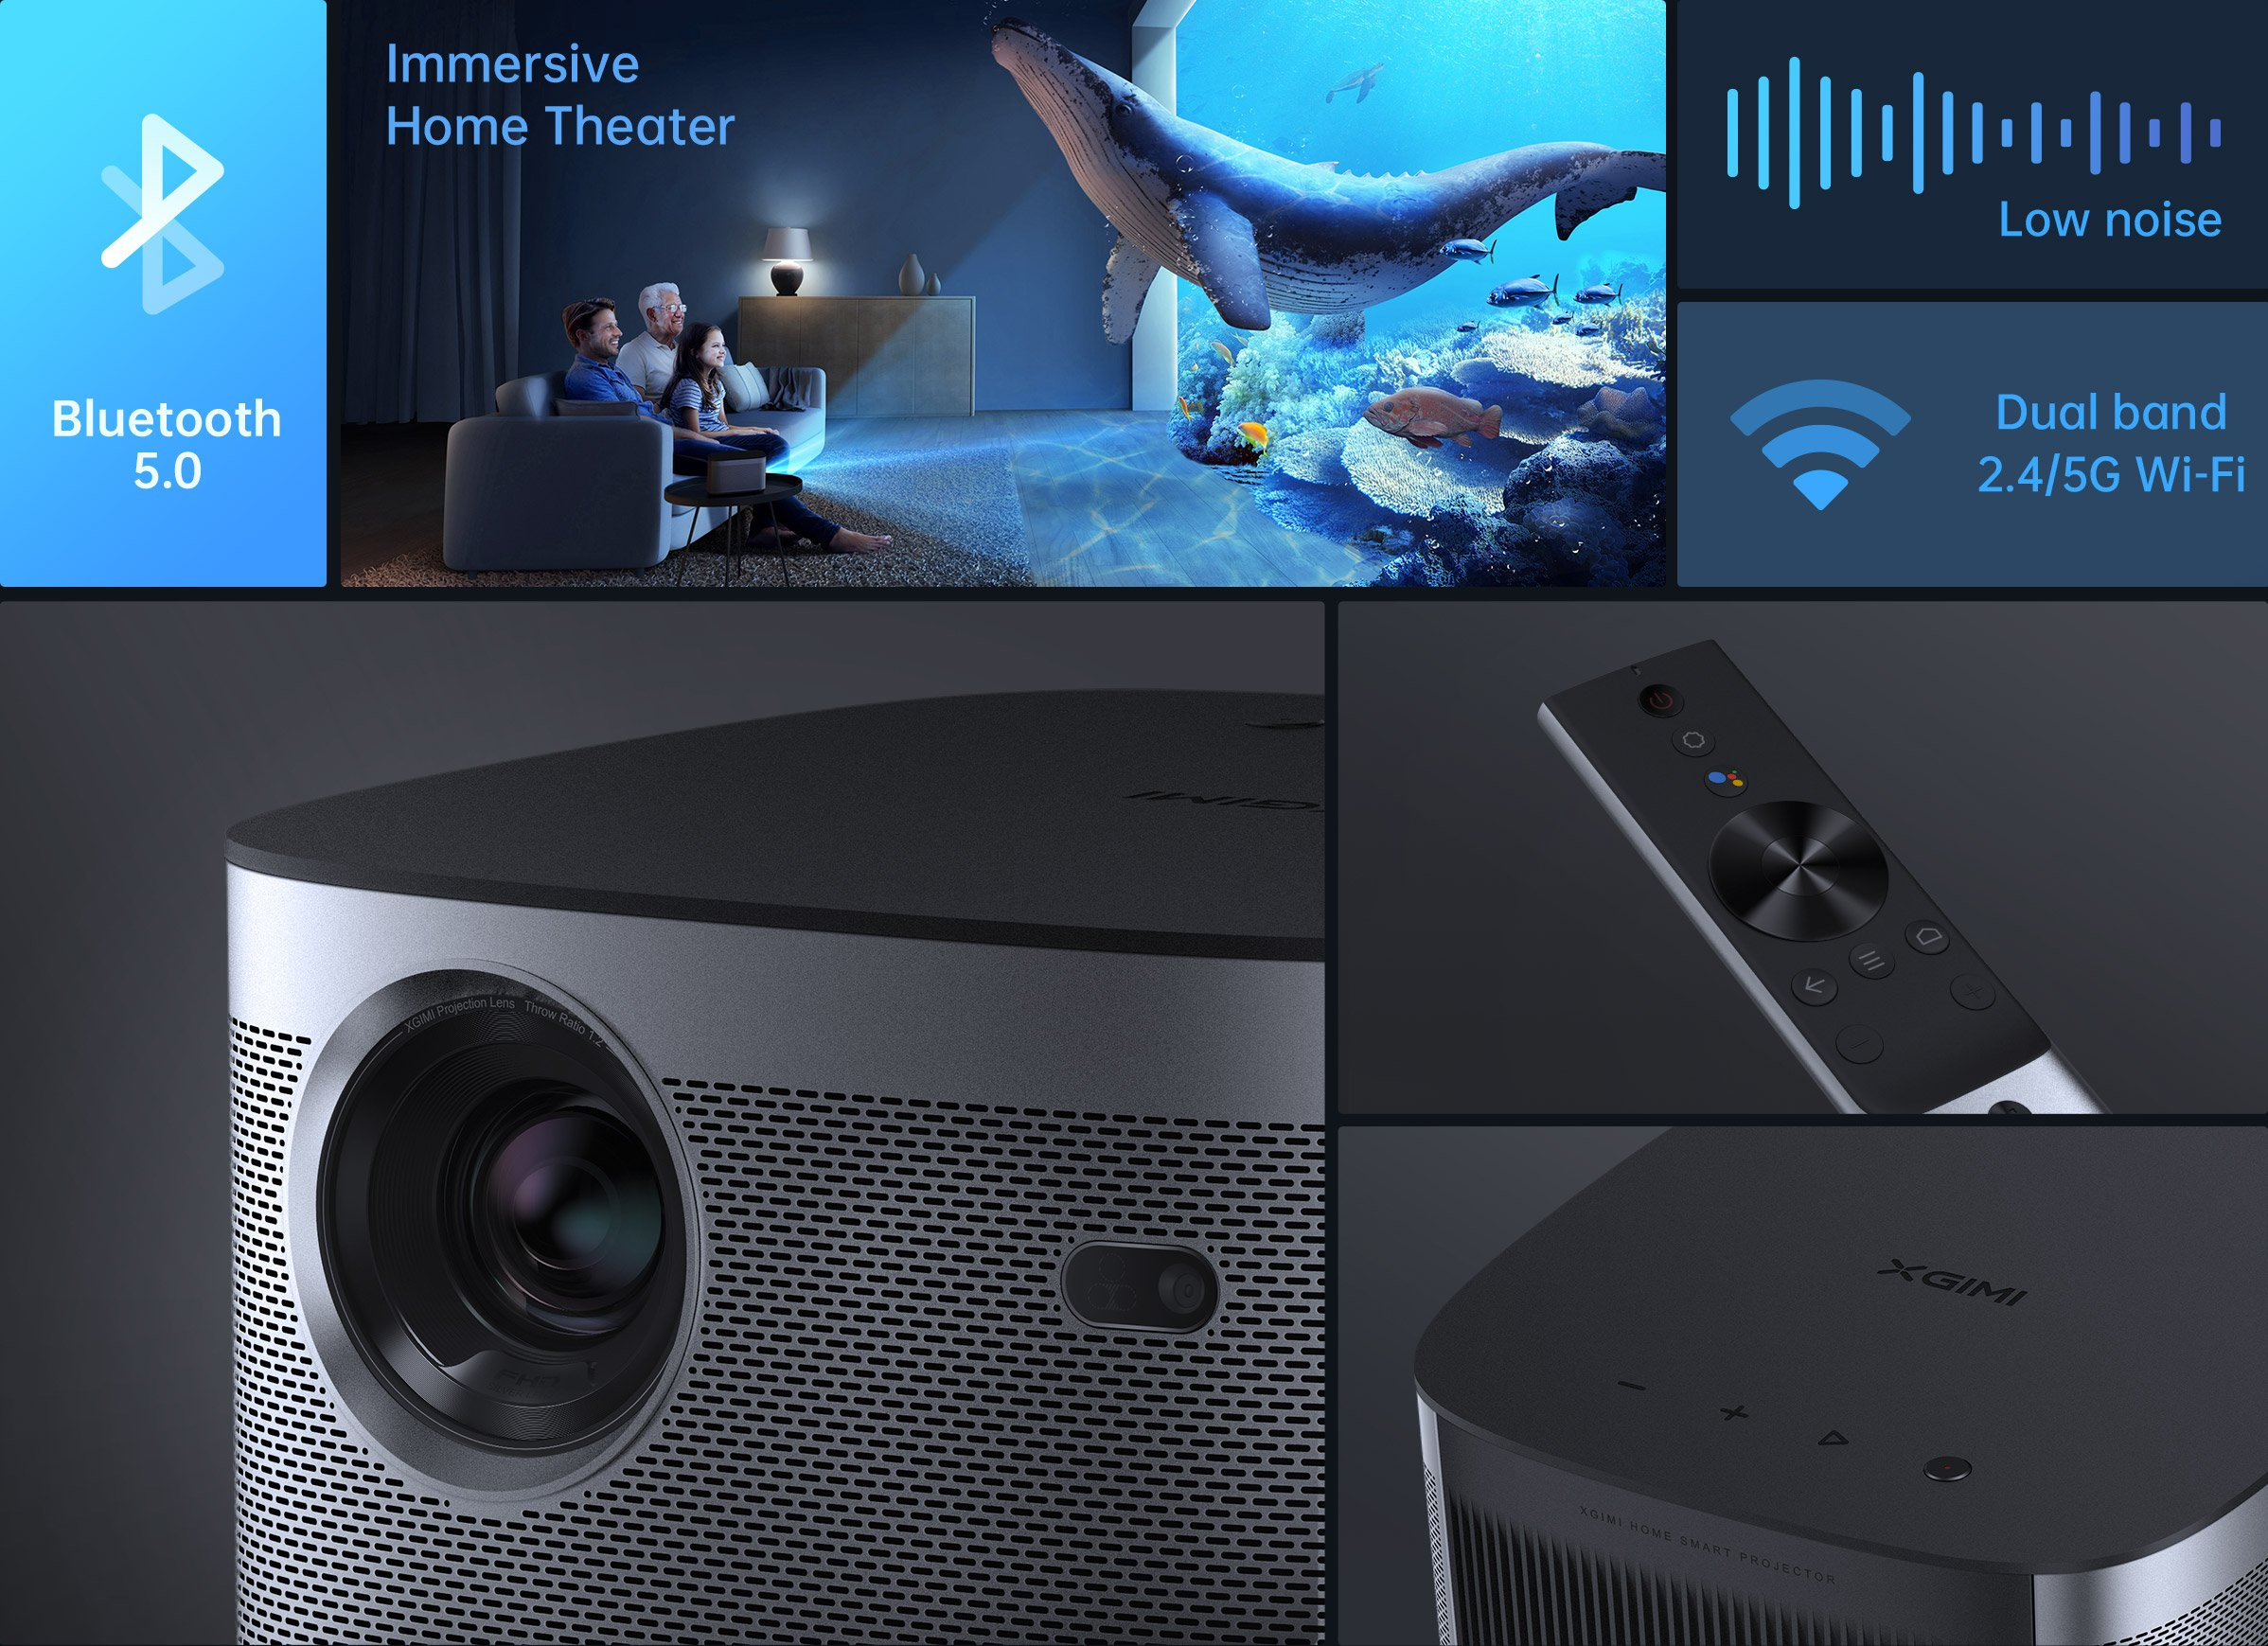 XGIMI - Horizon 1080p FHD Proyector 4K, 2200 lúmenes ANSI, Altavoces Harman  Kardon y Android TV - Plateado